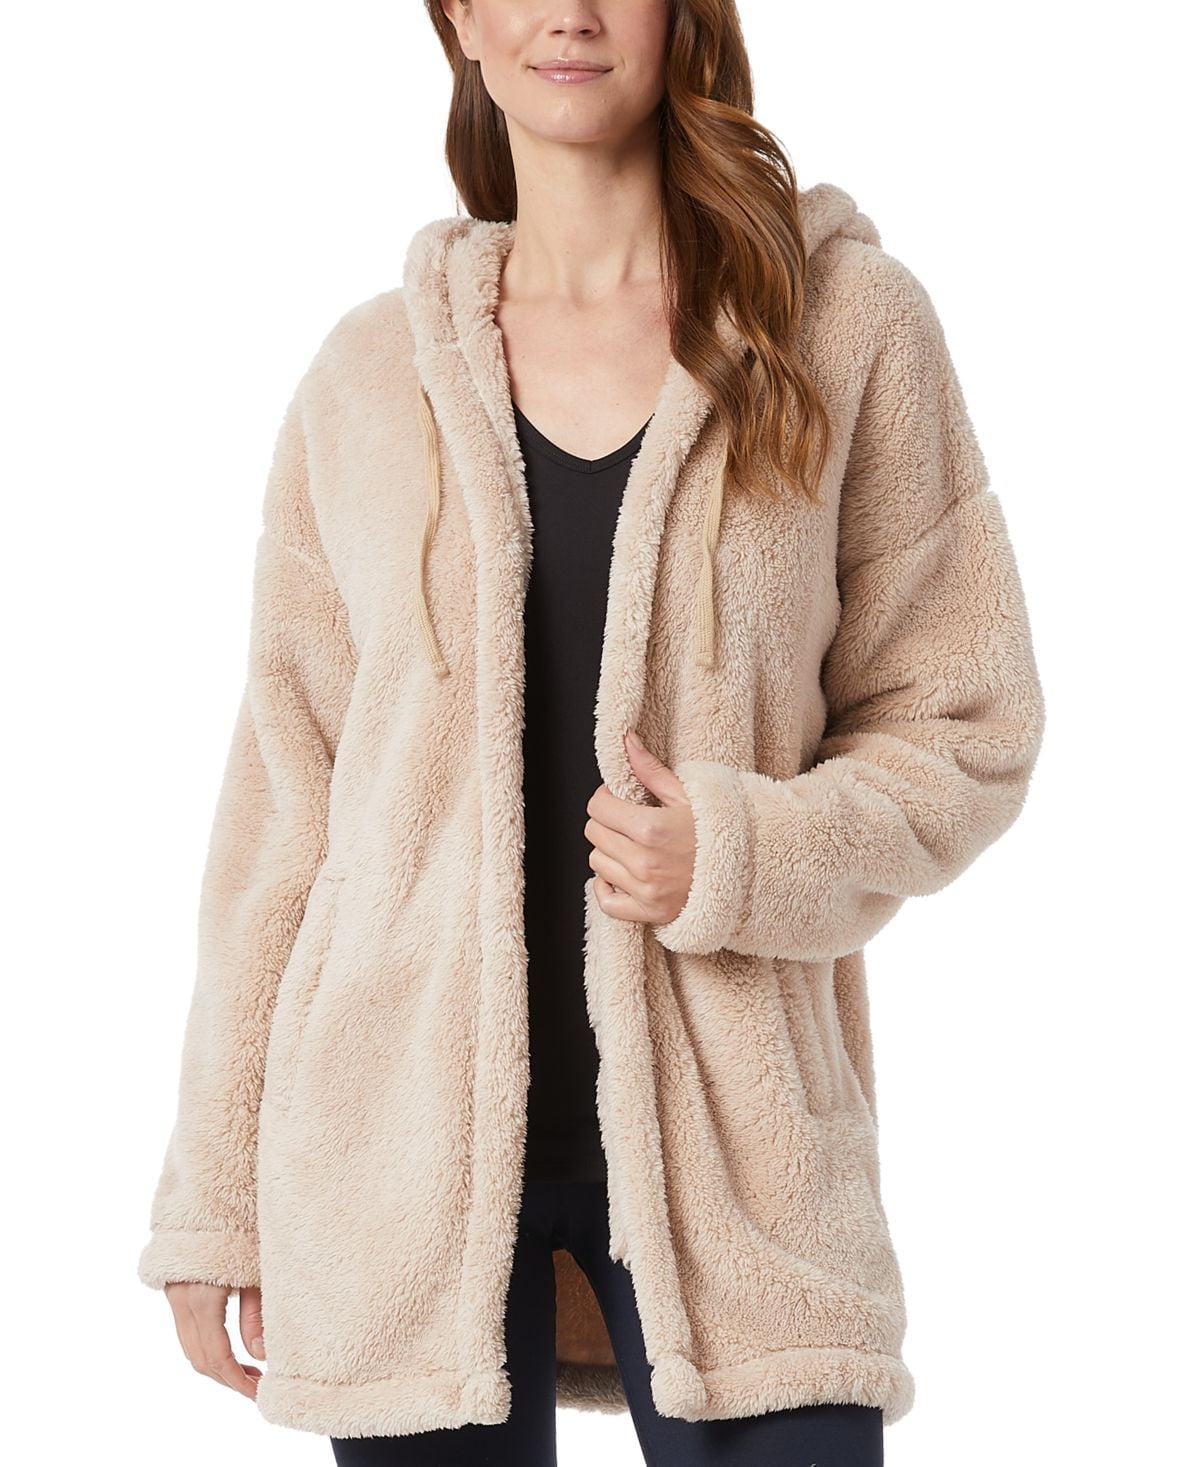 32 Degrees Women's Sherpa Hooded Cardigan, Coconut Ivory, L - Walmart.com